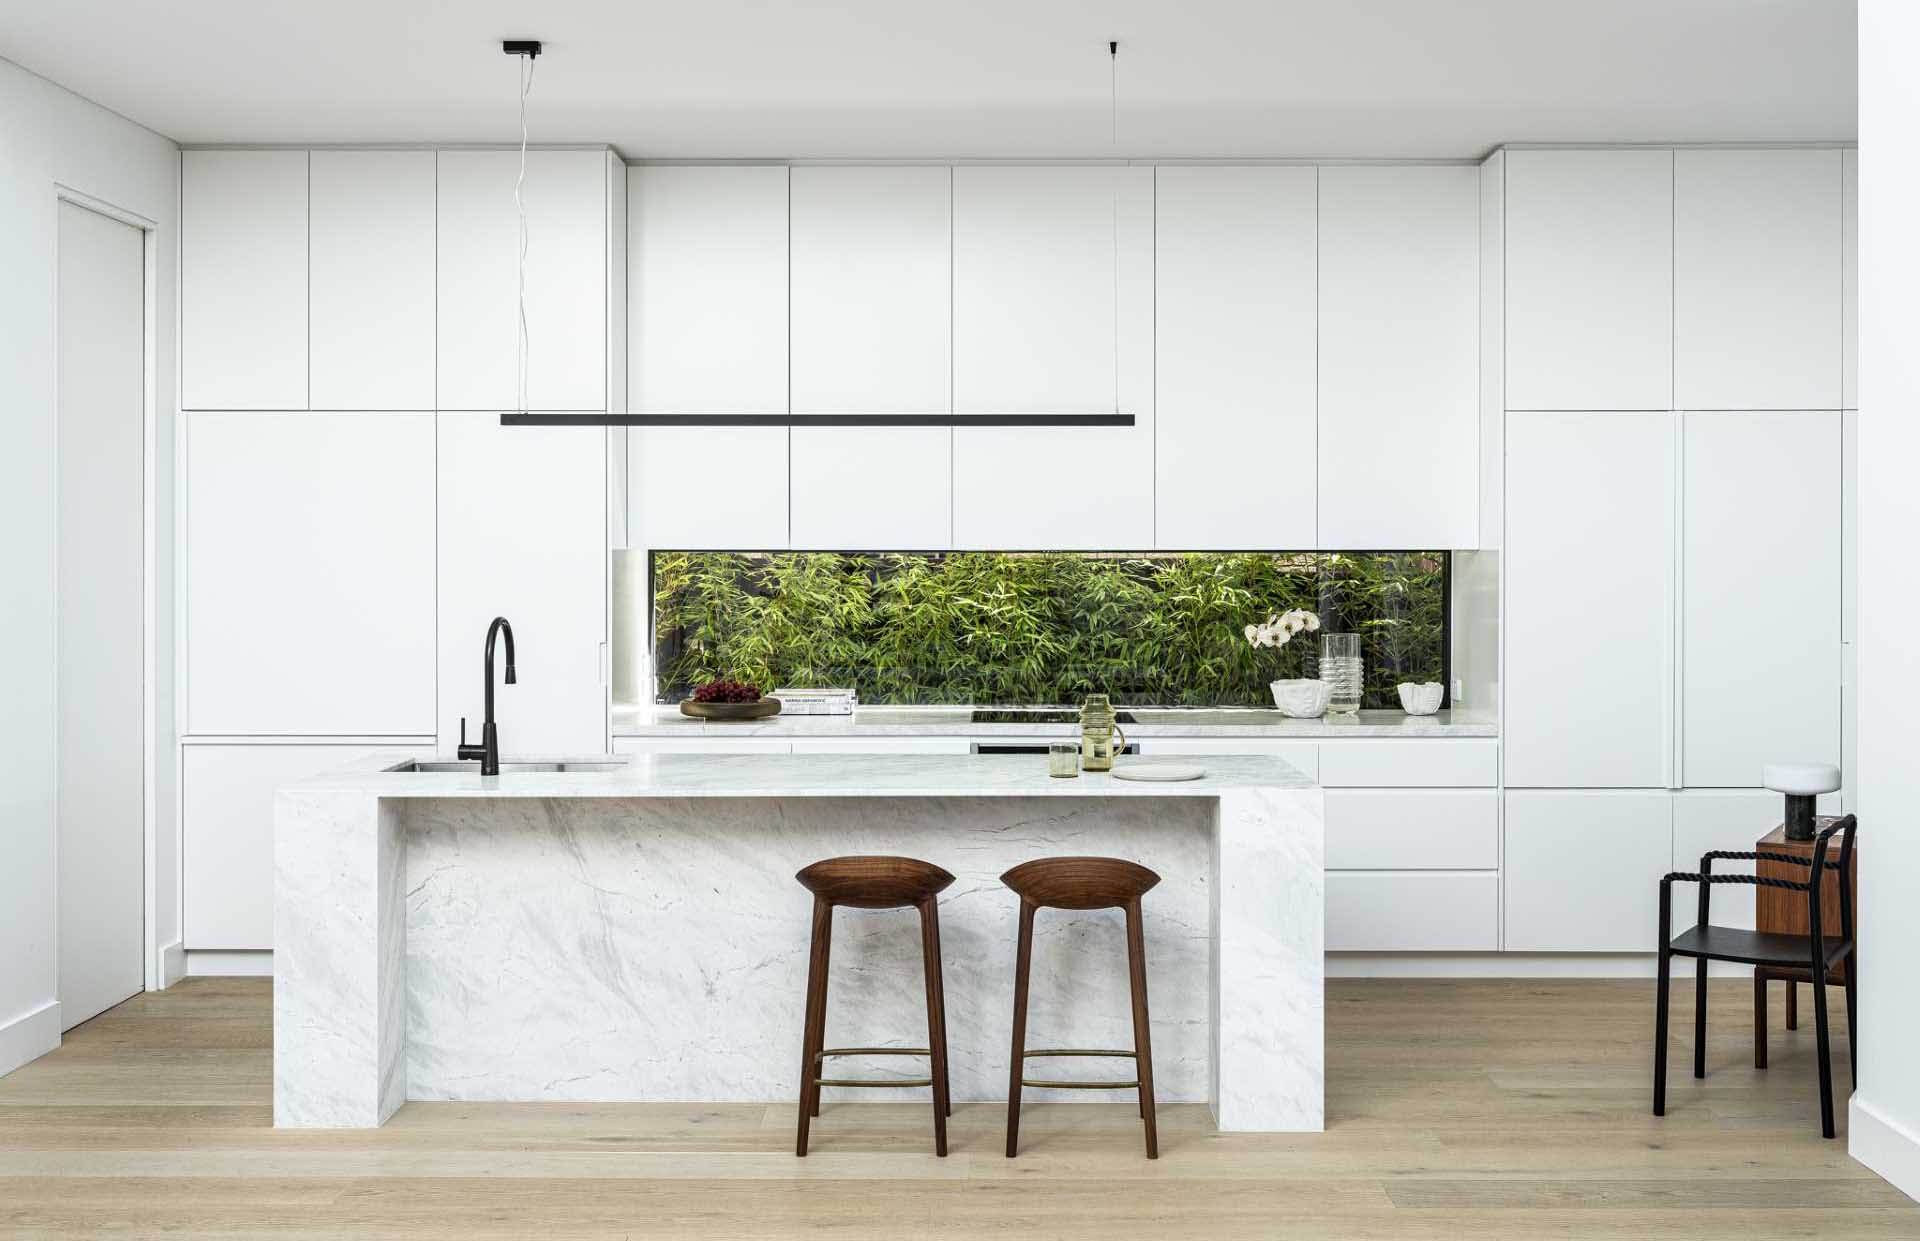 A modern white kitchen with minimalist white cabinets, a window backsplash, and an island.